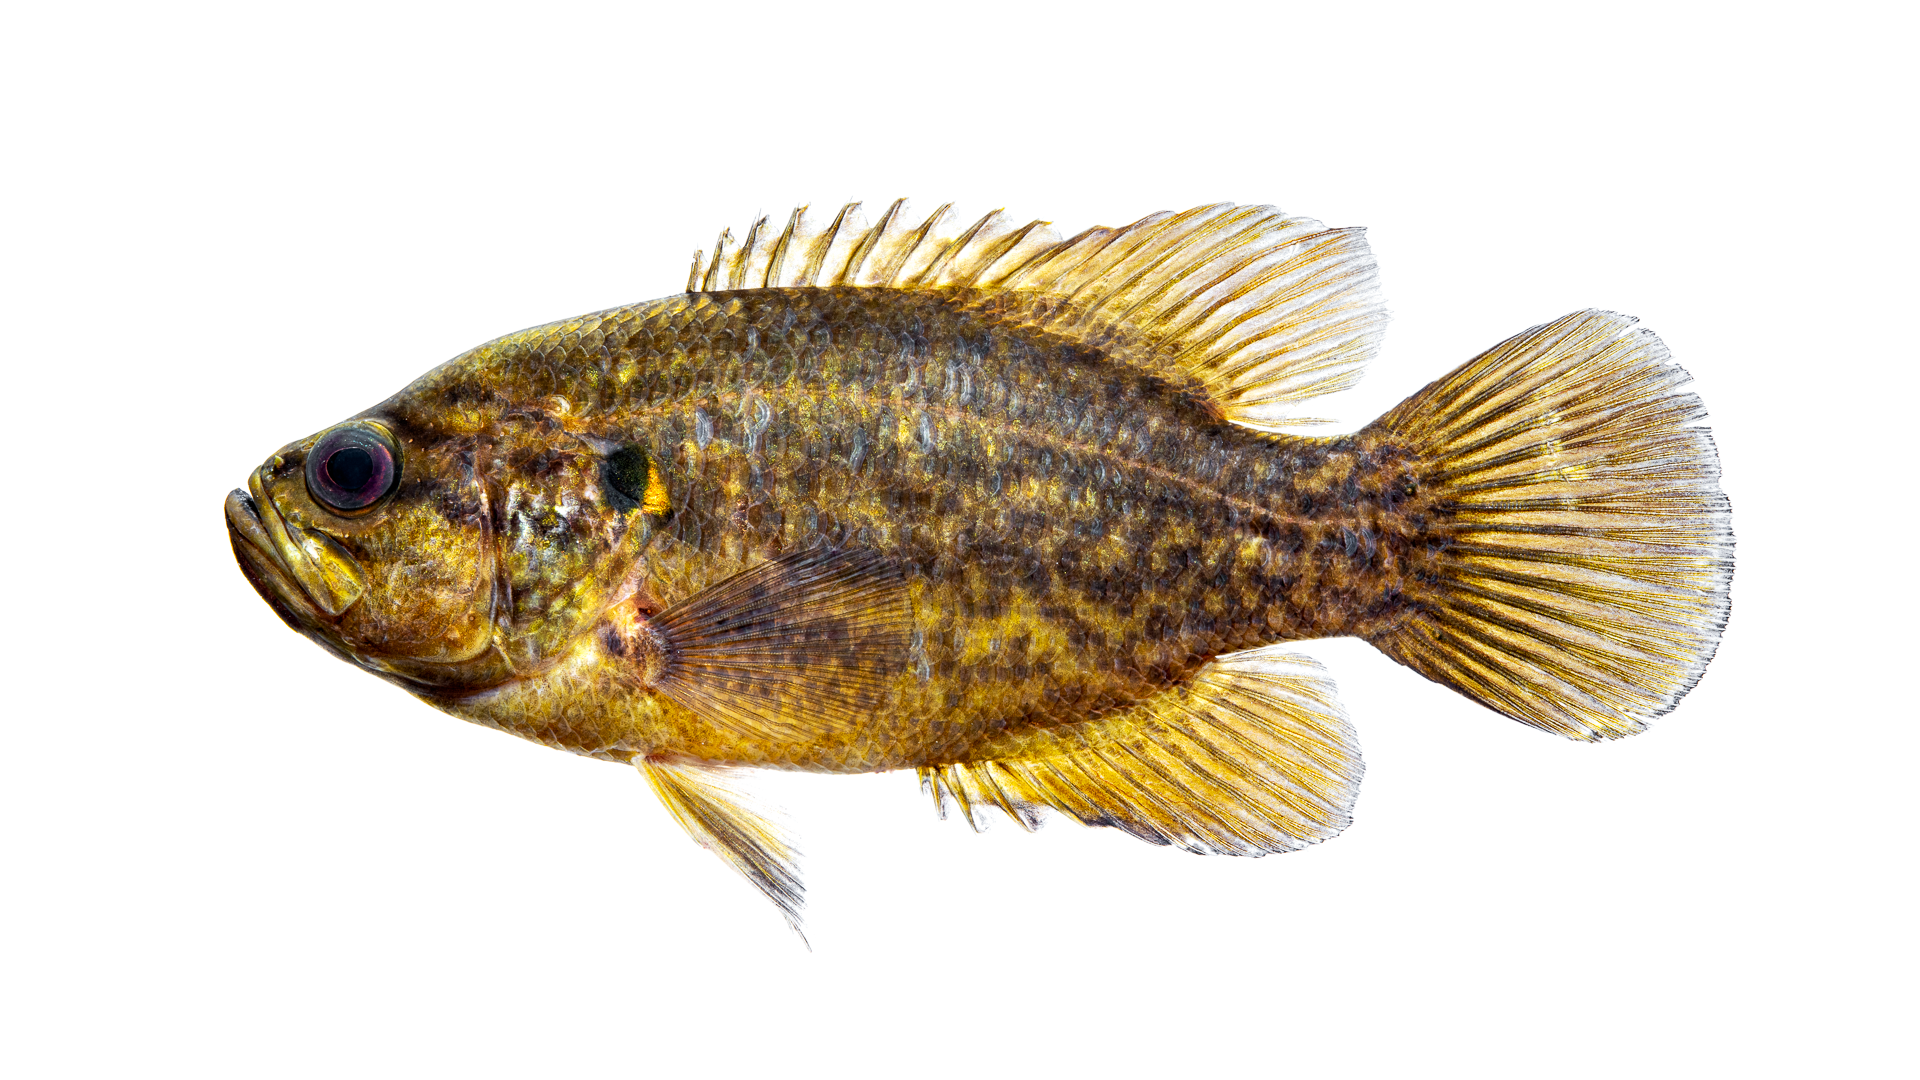 Sunfish (Family Centrarchidae) Diversity in North Carolina